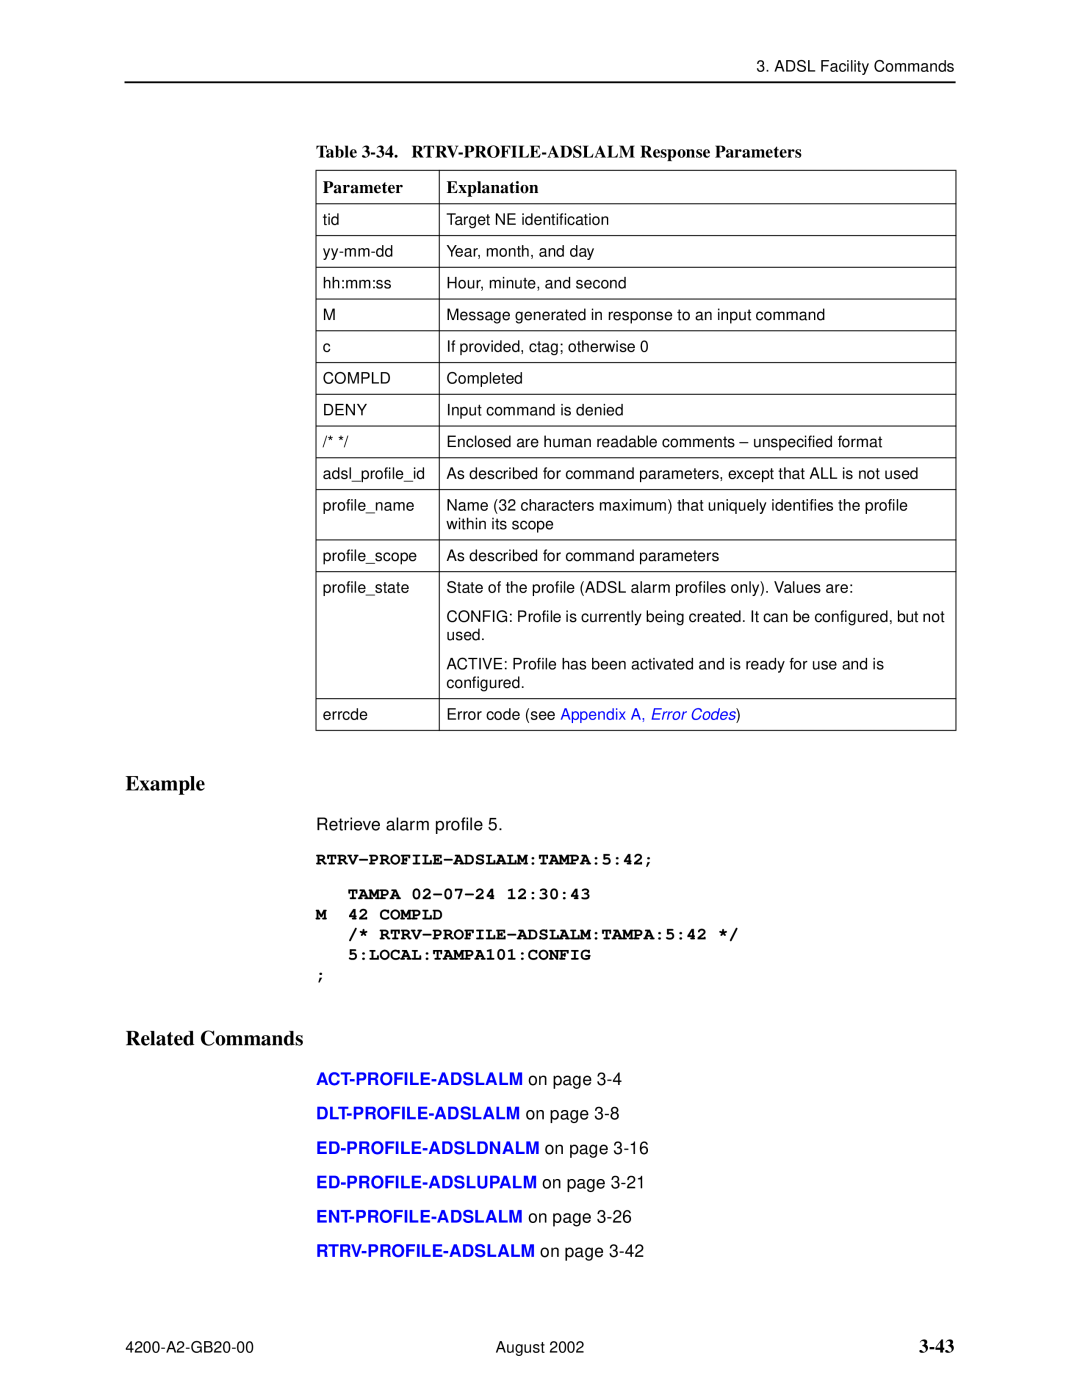 Paradyne 4200 3-43, 34. RTRV-PROFILE-ADSLALM Response Parameters, RTRV-PROFILE-ADSLALMTAMPA542 TAMPA 02-07-24 M 42 COMPLD 